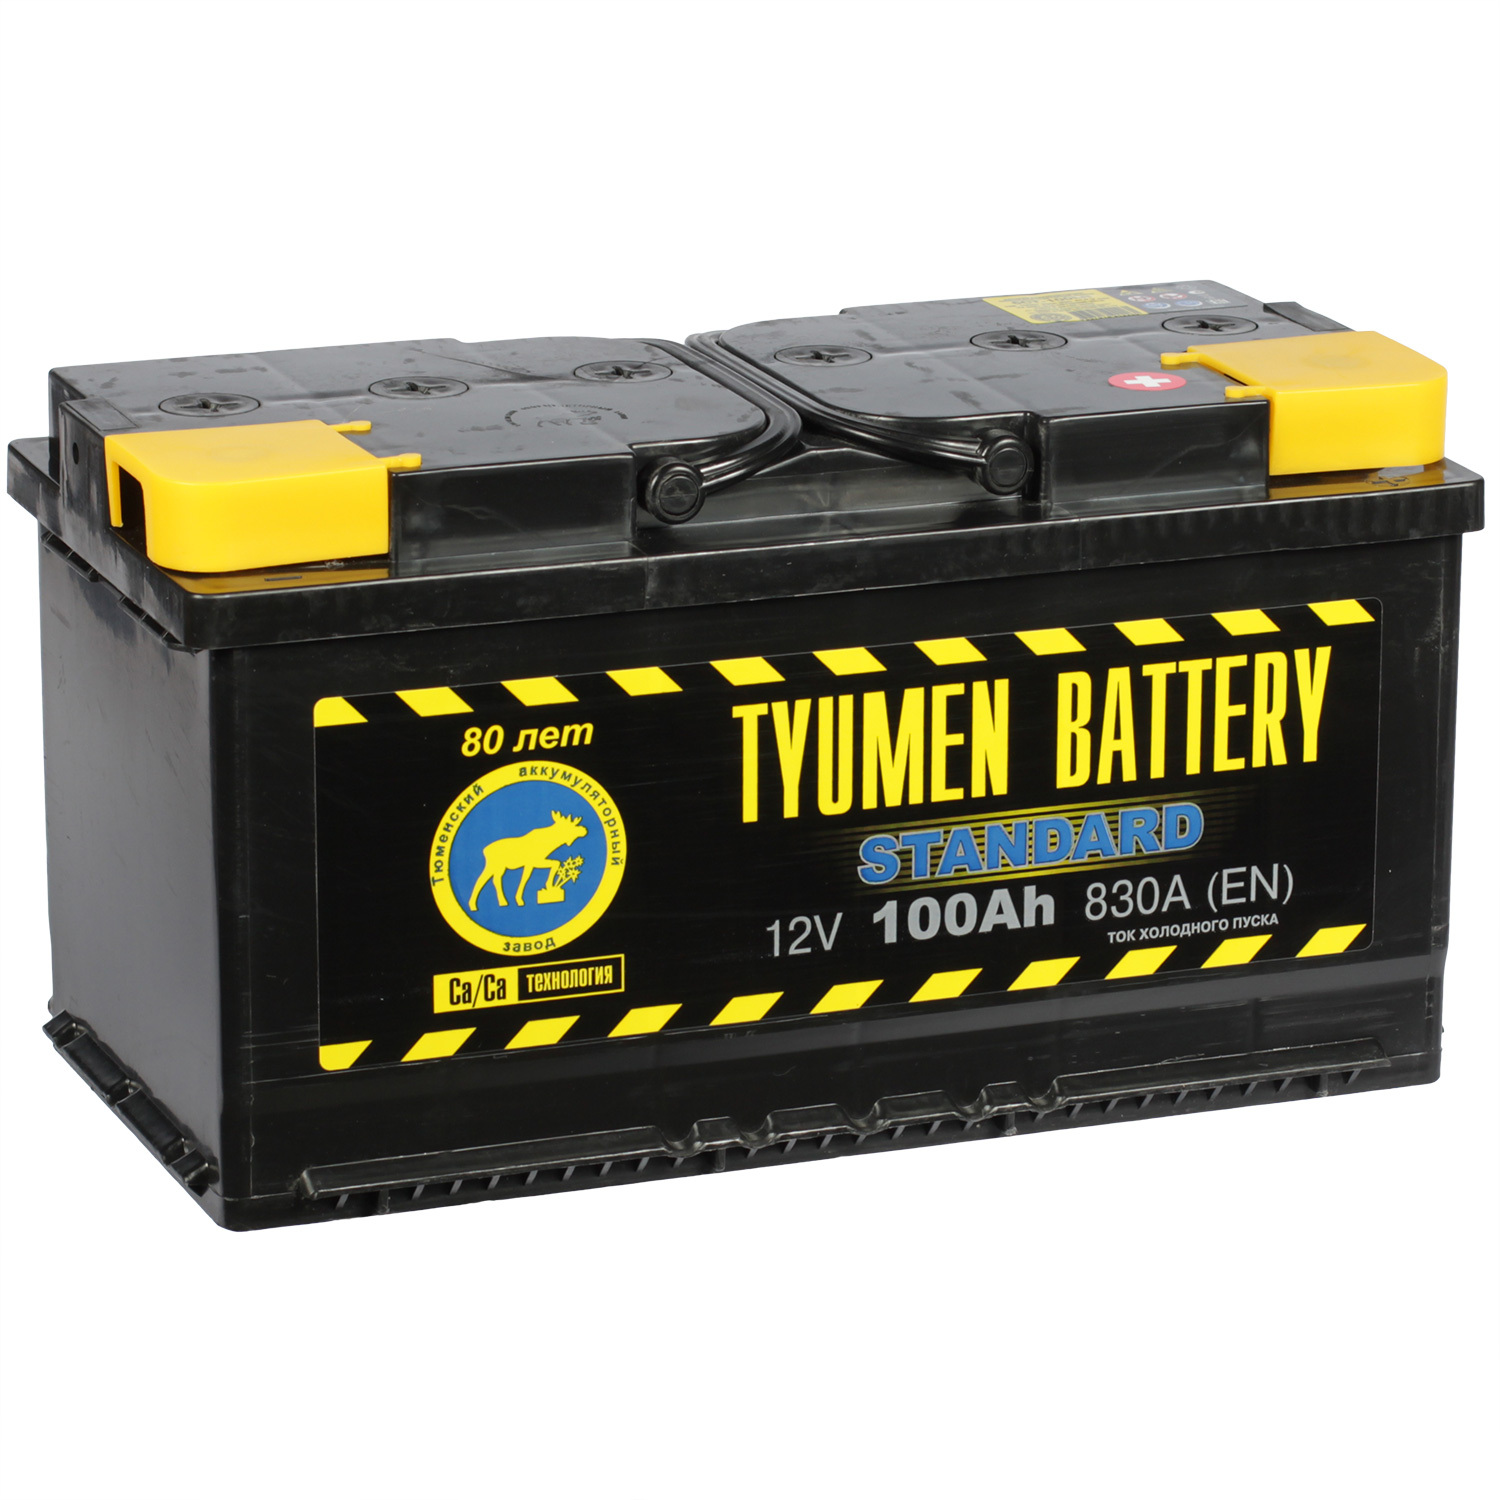 Tyumen Battery Автомобильный аккумулятор Tyumen Battery Standard 100 Ач обратная полярность L5 tyumen battery автомобильный аккумулятор tyumen battery 95 ач прямая полярность d31r